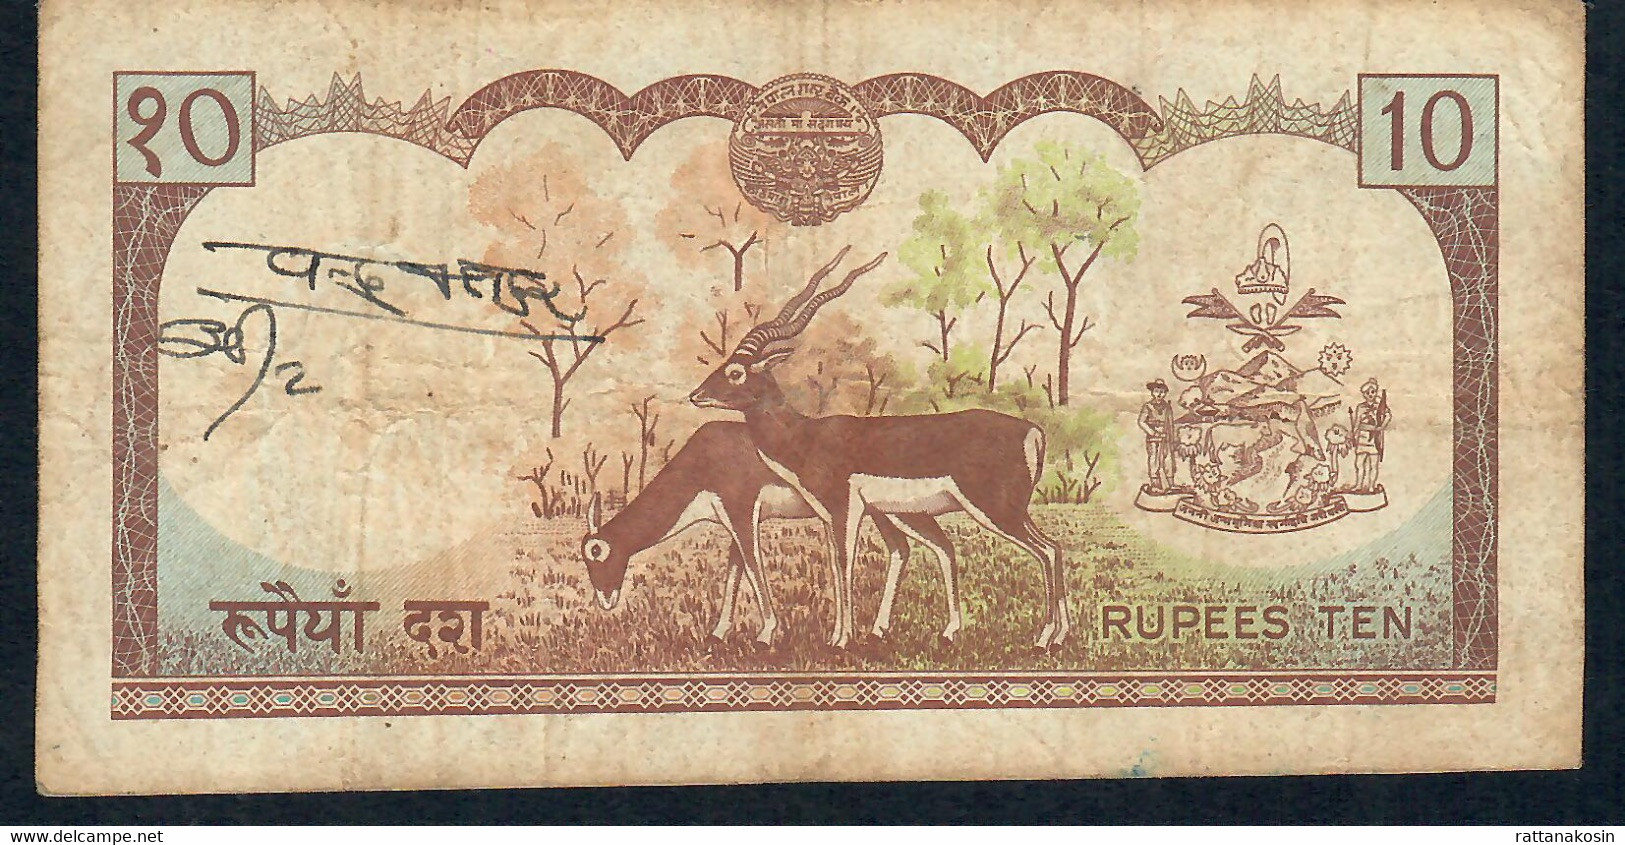 NEPAL P24a 1O RUPEES 1974 Signature 6.  FINE NO P.h. - Népal